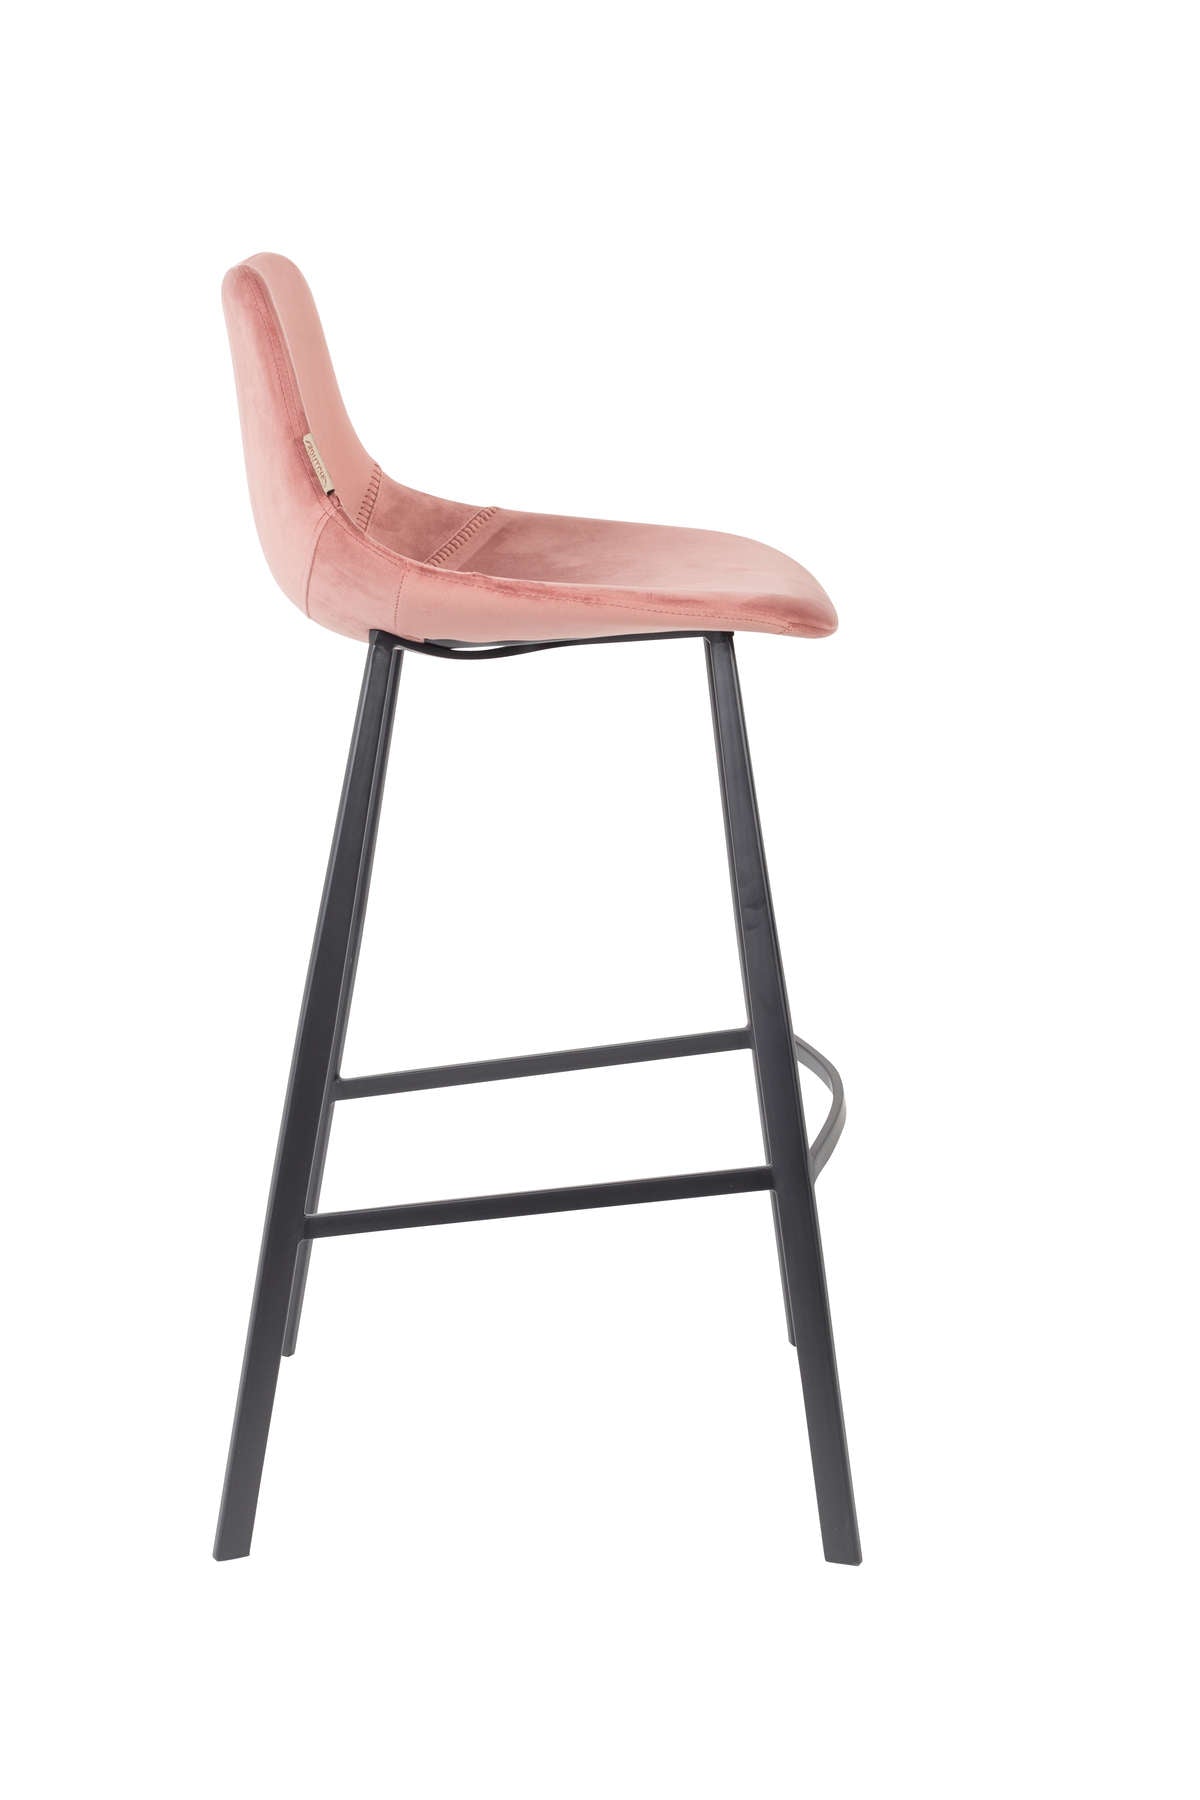 FRANKY bar stool 80 pink, Dutchbone, Eye on Design